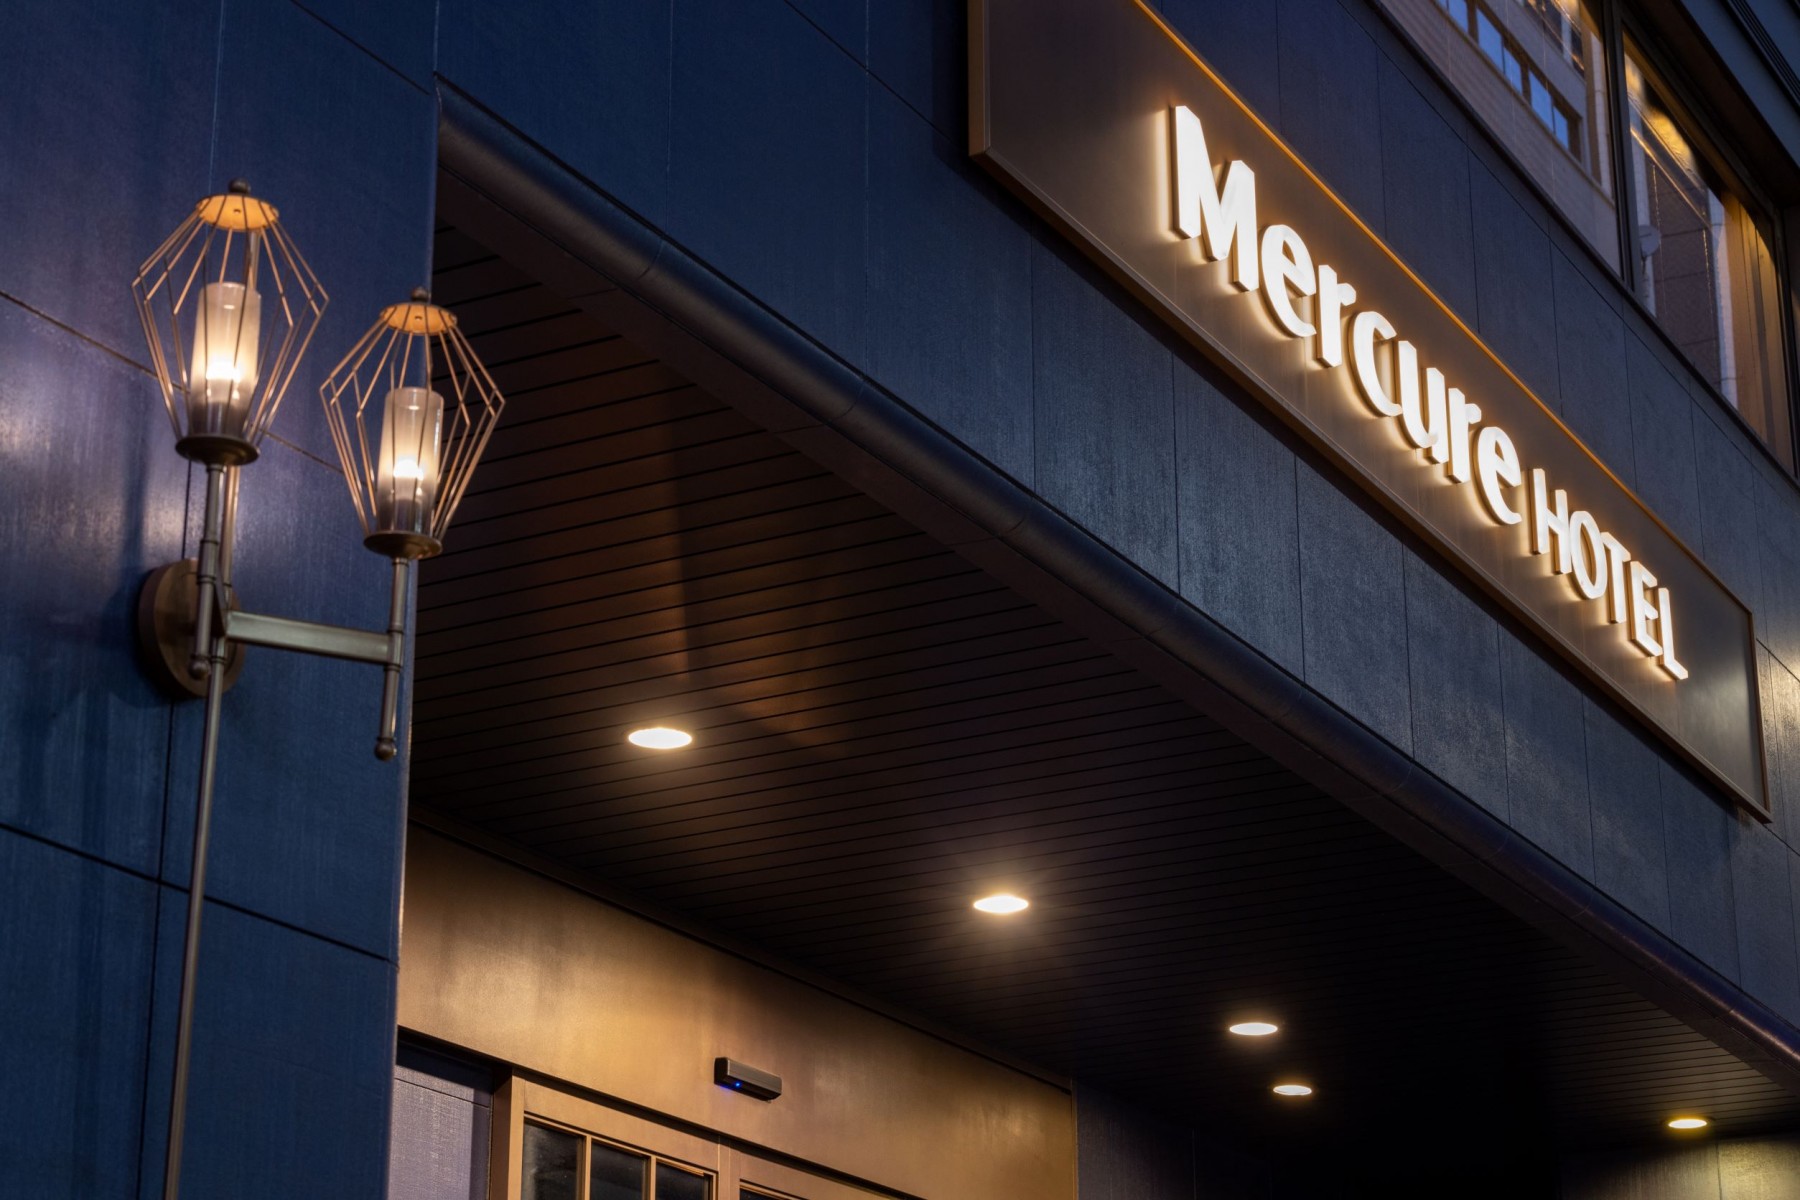 Mercure Tokyo Ginza Signage at Hotel Entrance